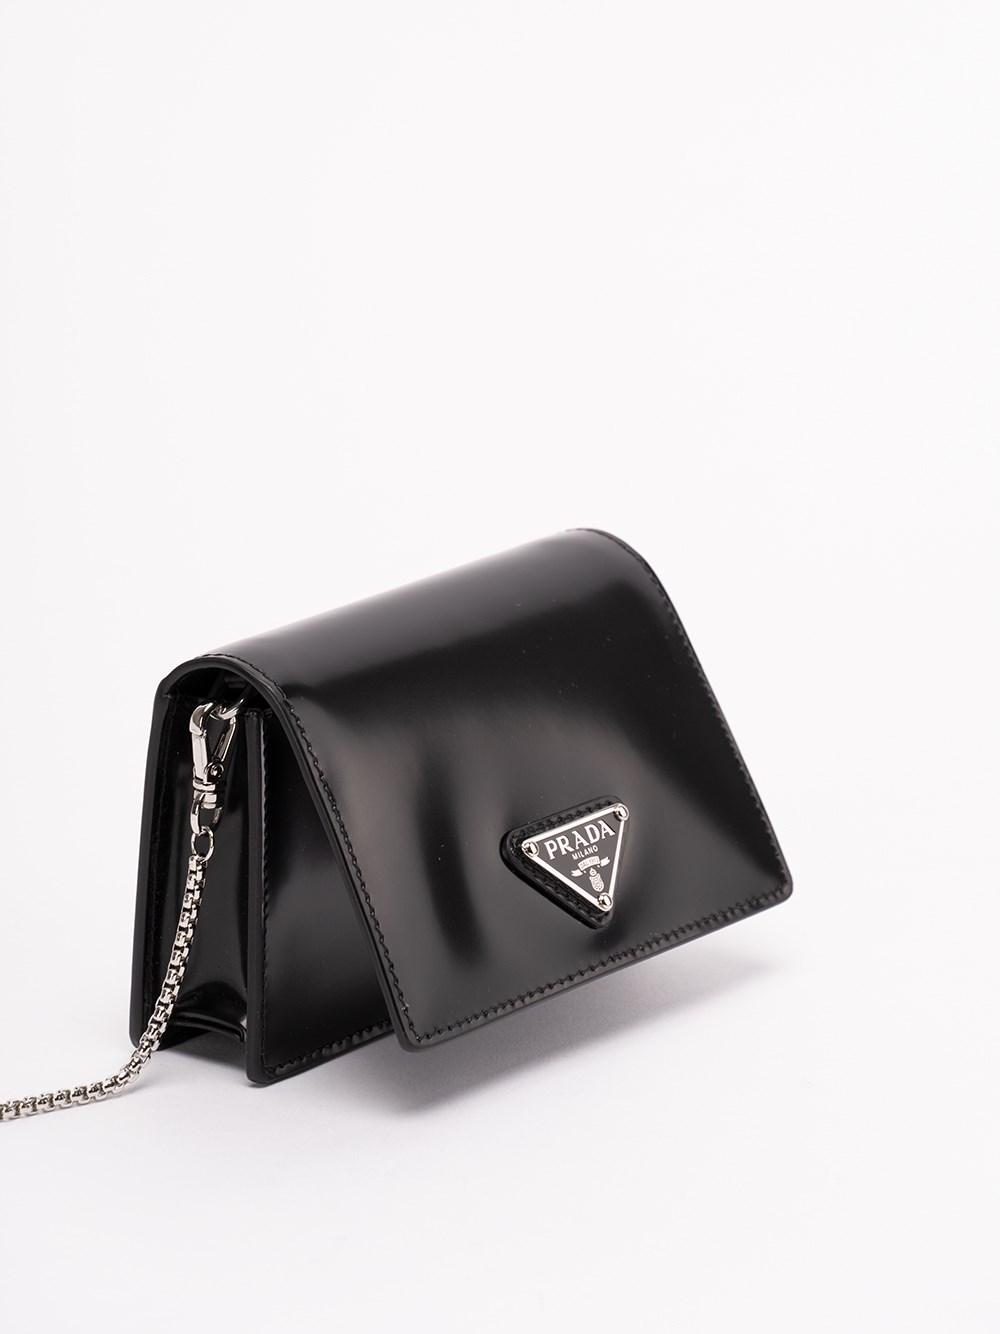 Micro Leather Shoulder Bag in Black - Prada